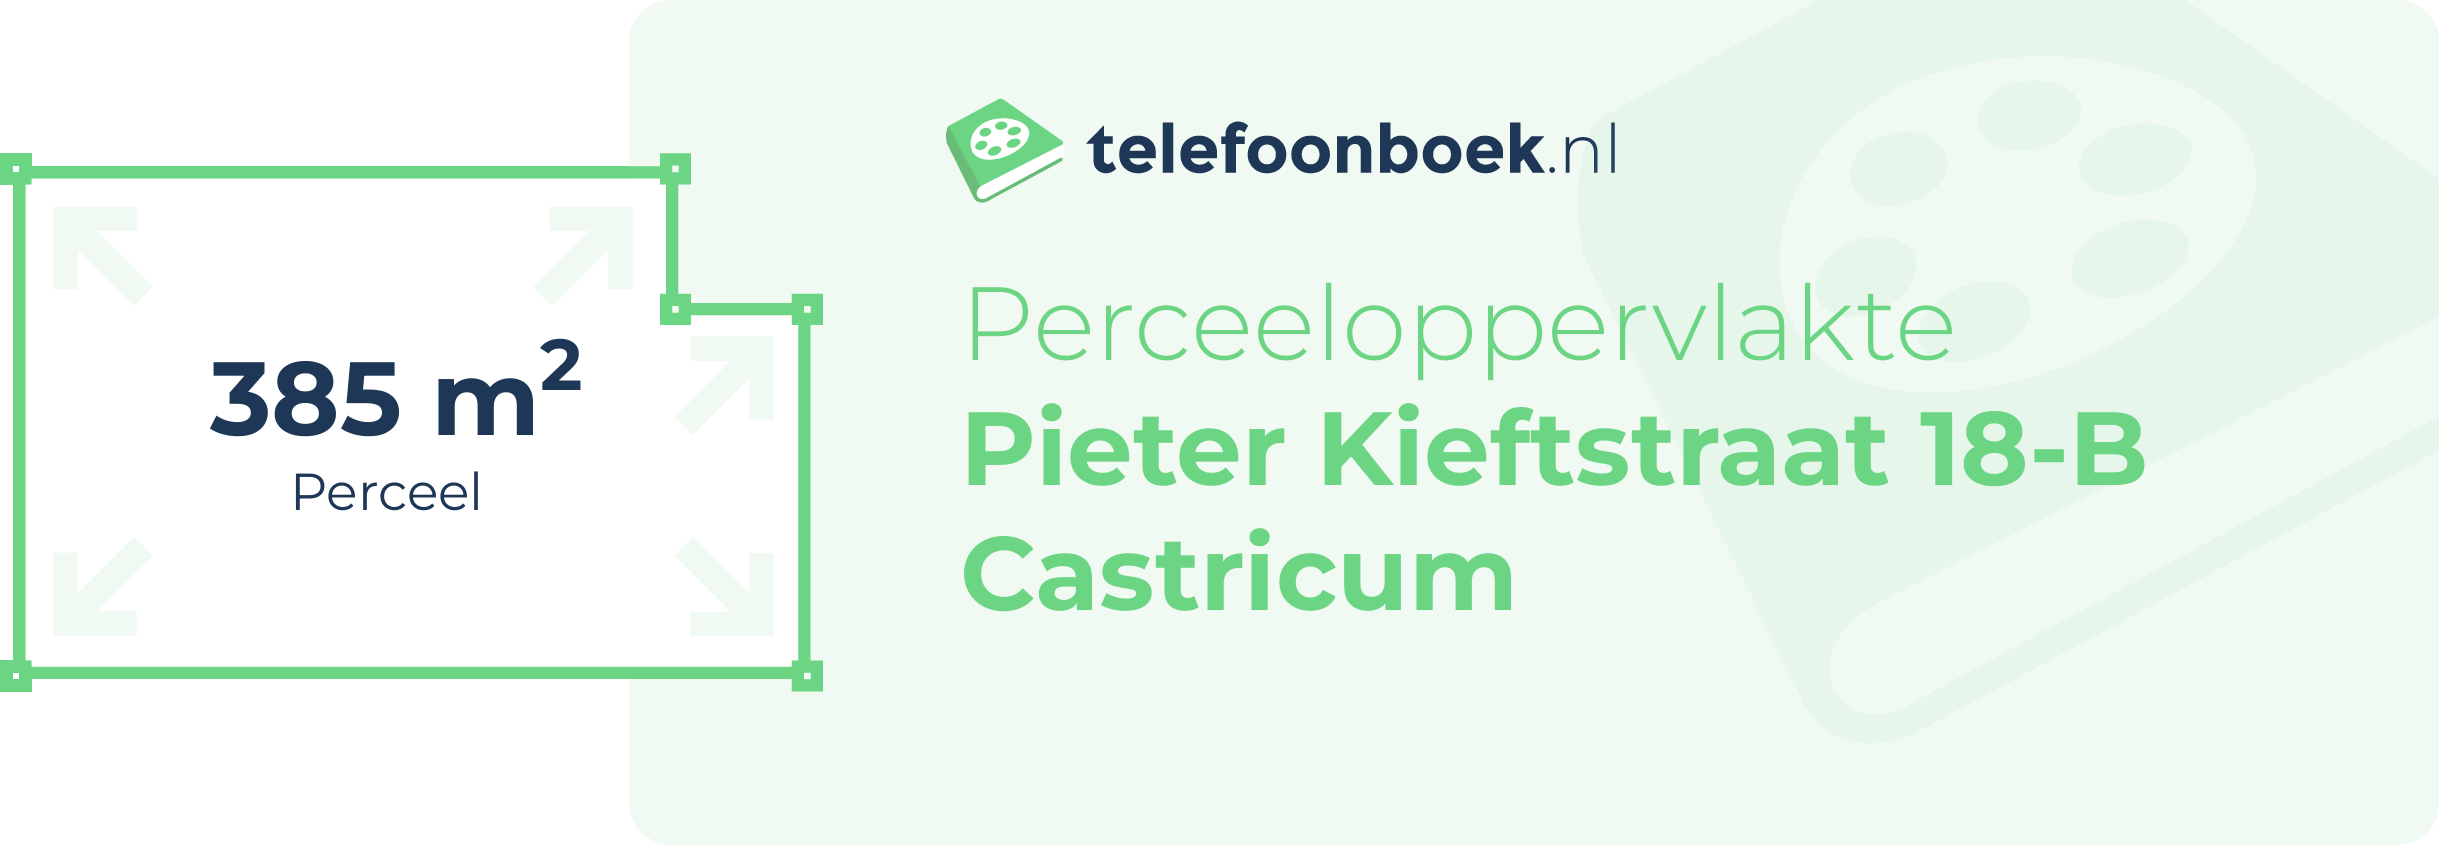 Perceeloppervlakte Pieter Kieftstraat 18-B Castricum